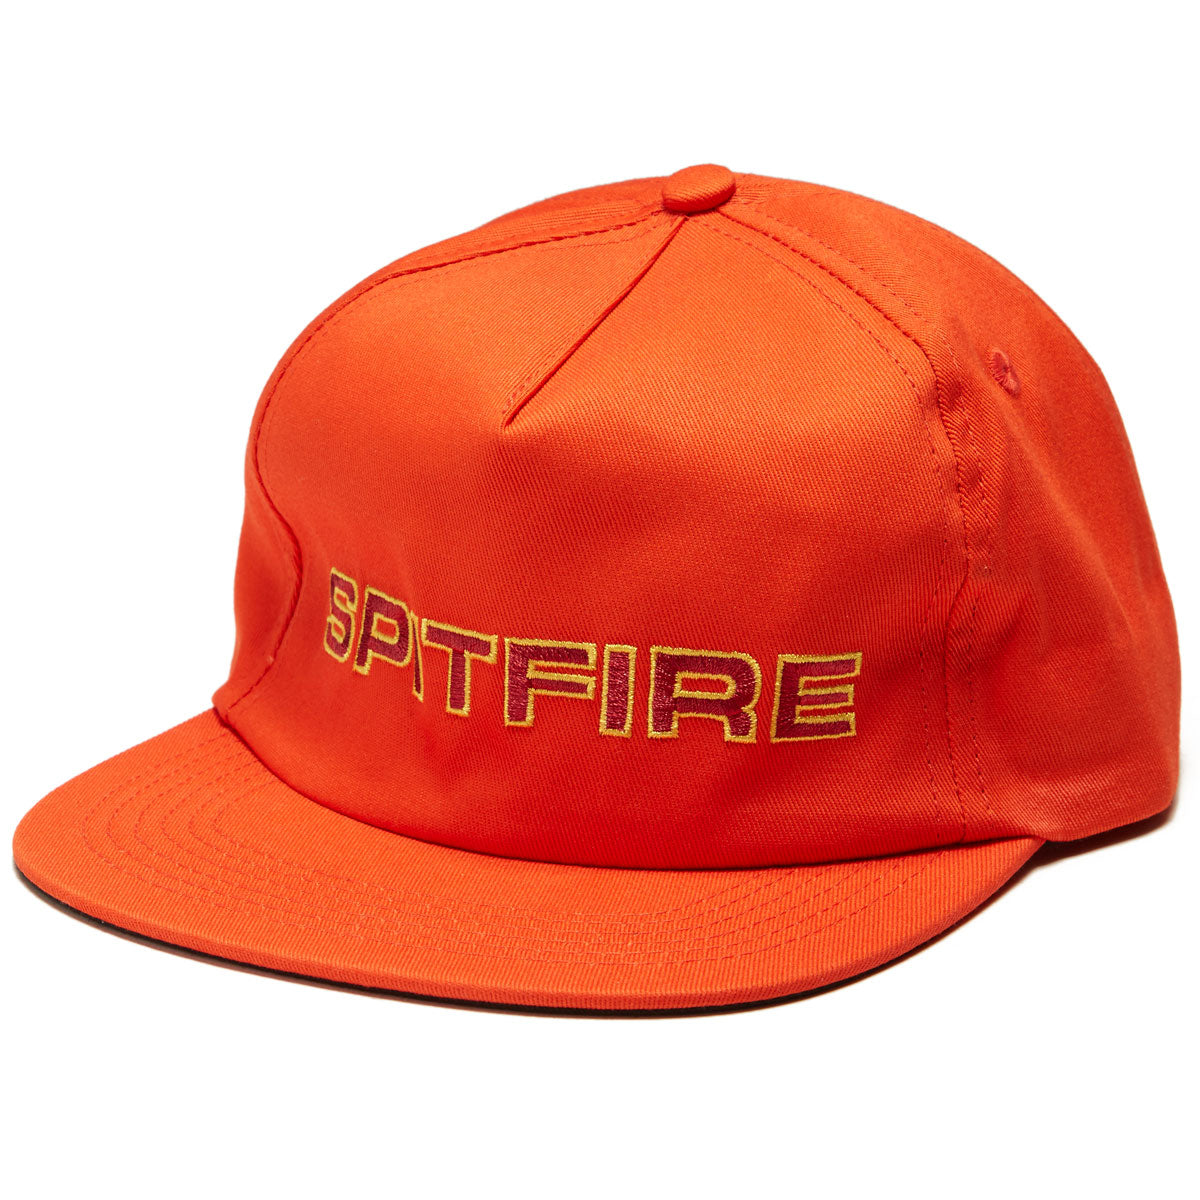 SPITFIRE CLASSIC '87 SCRIPT HAT - ORANGE RED